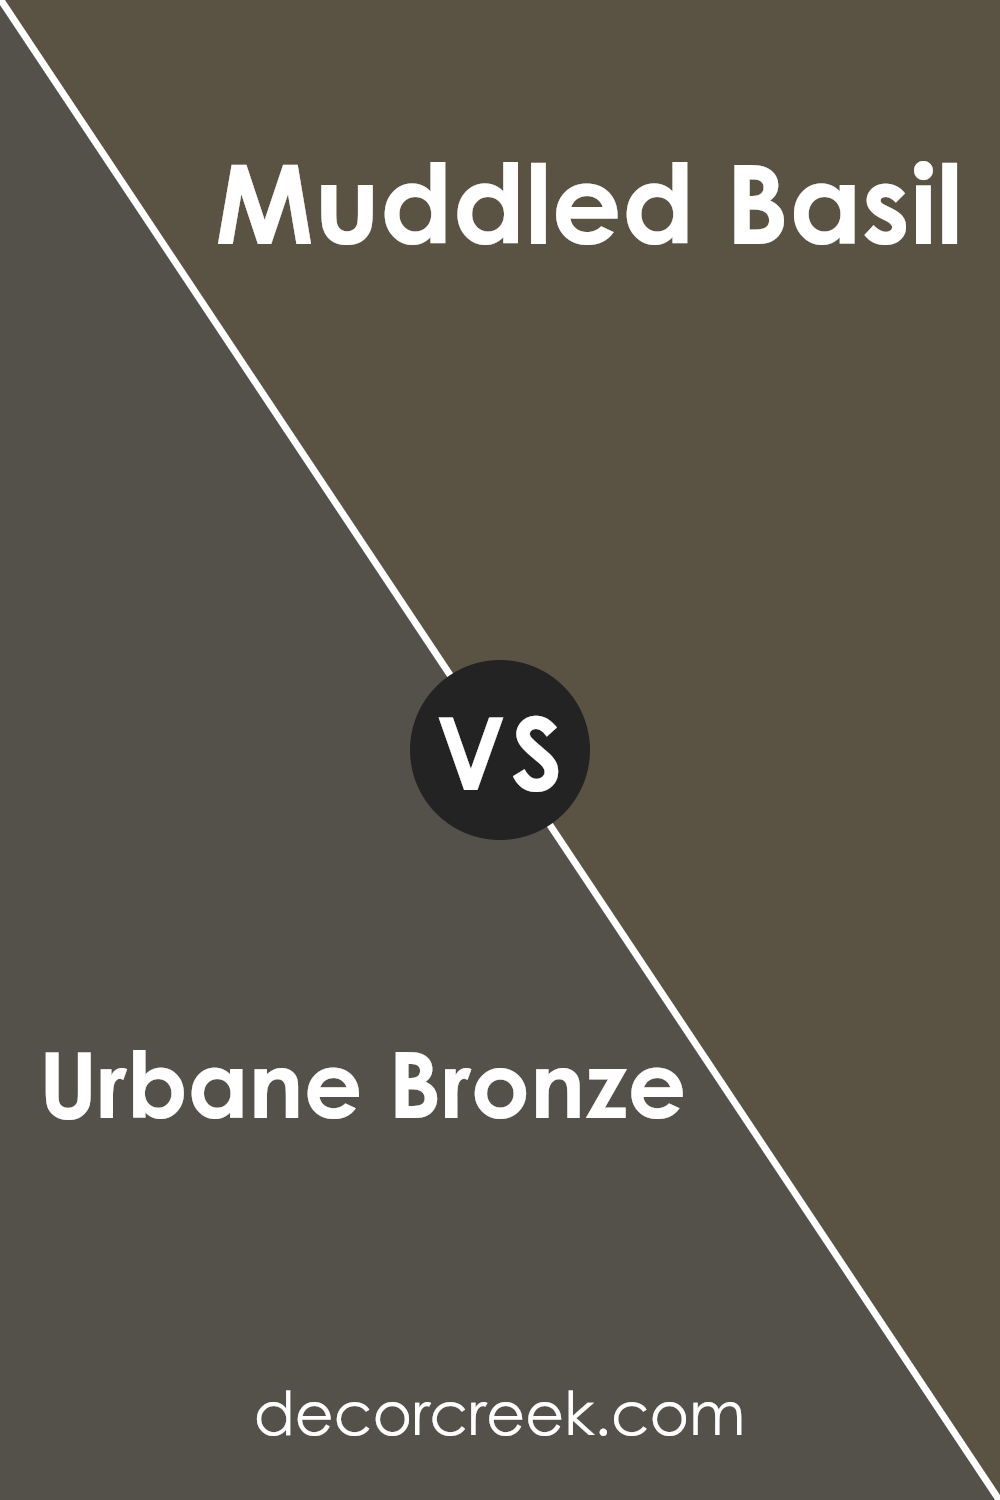 urbane_bronze_sw_7048_vs_muddled_basil_sw_7745